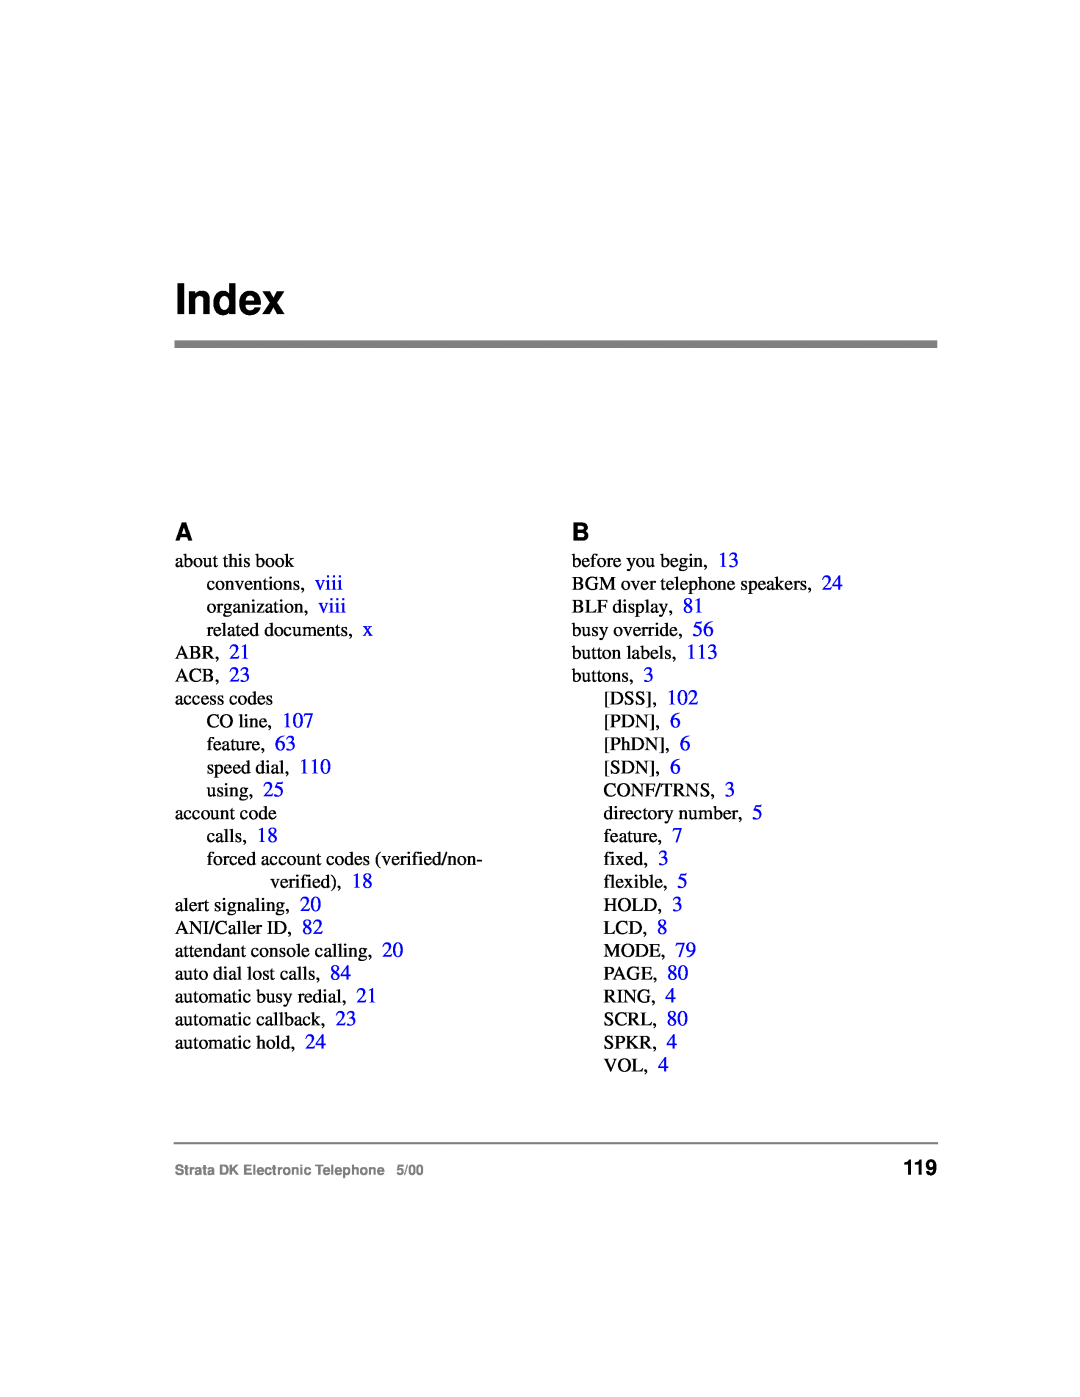 Toshiba Strata DK manual Index, viii 